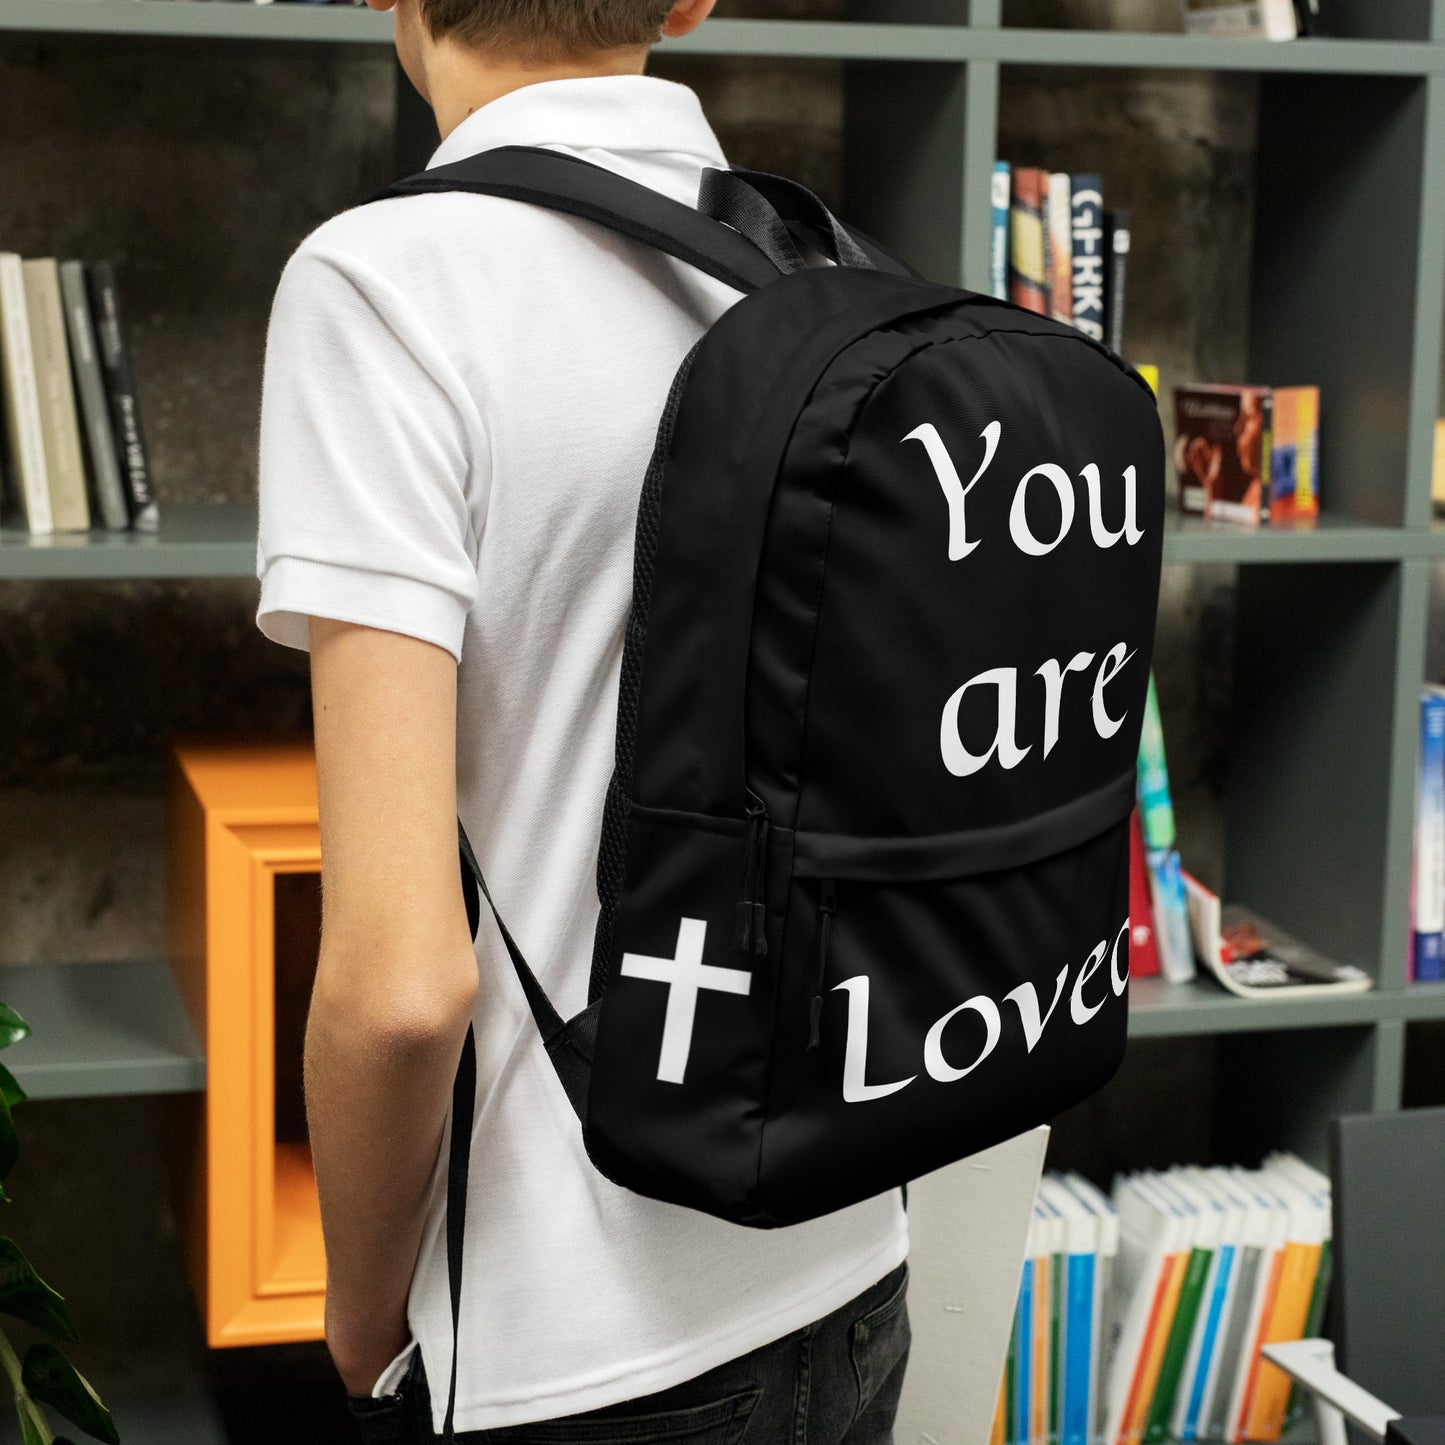 Love Backpack